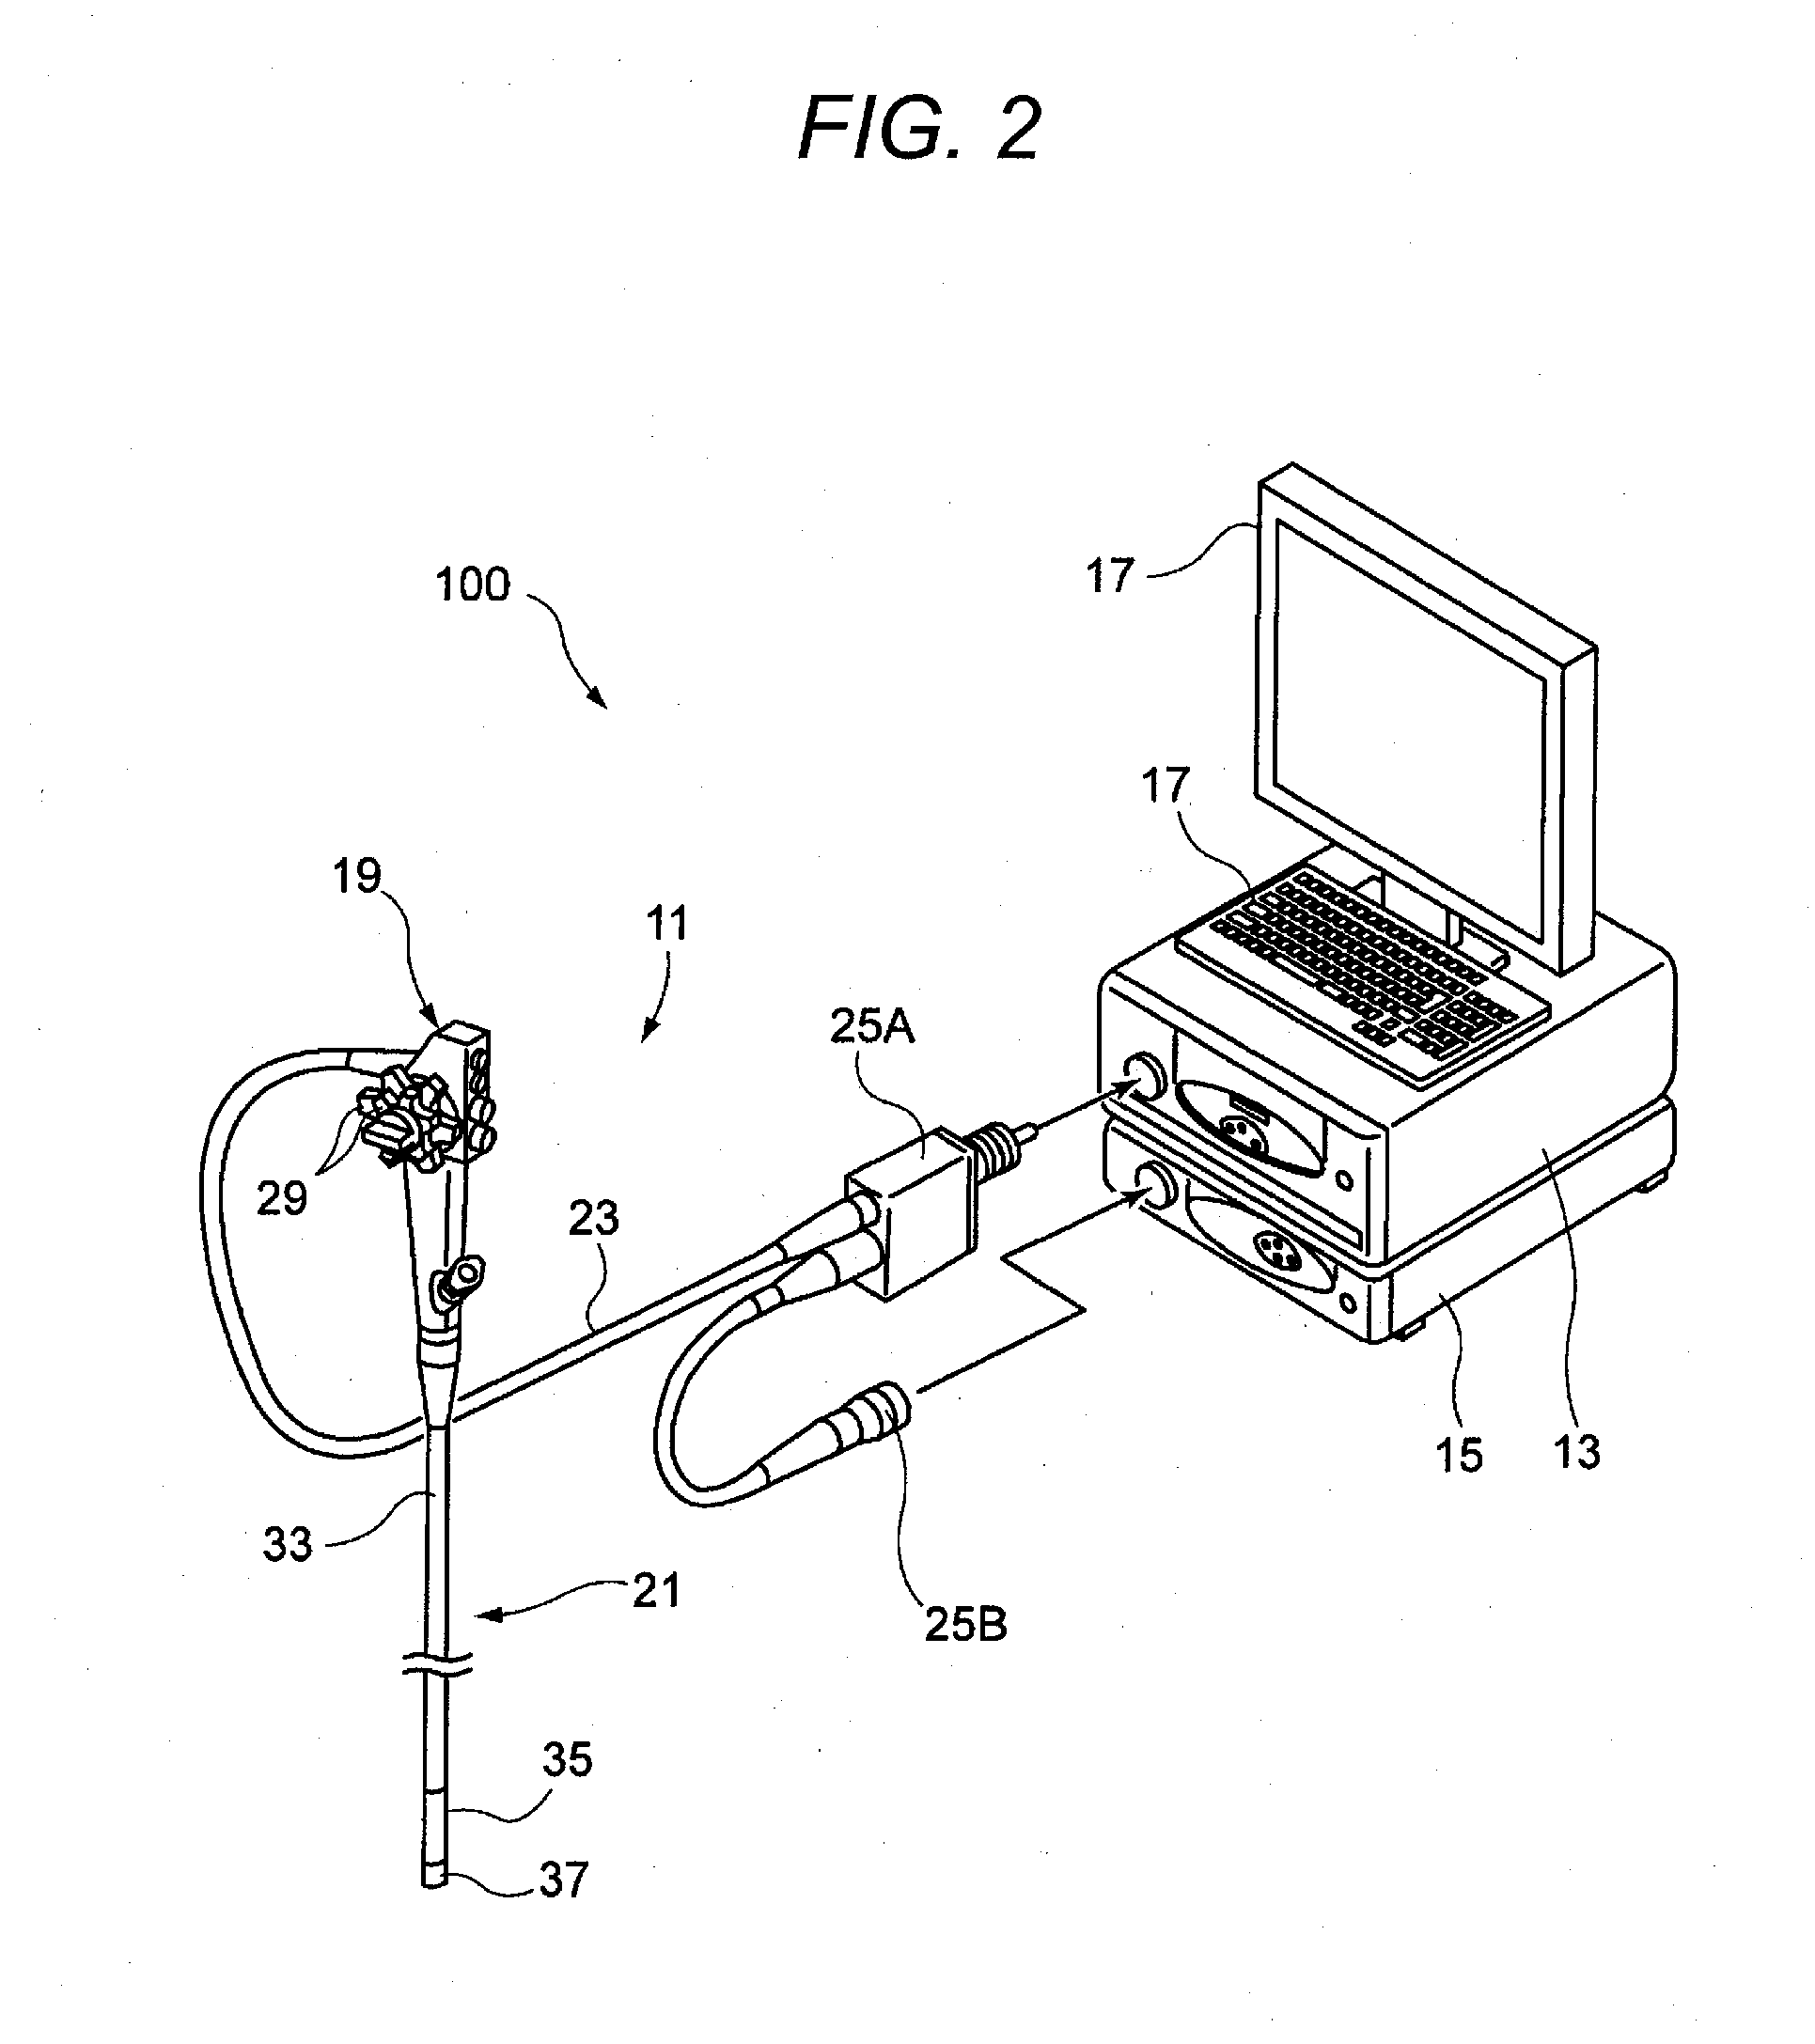 Endoscopic apparatus